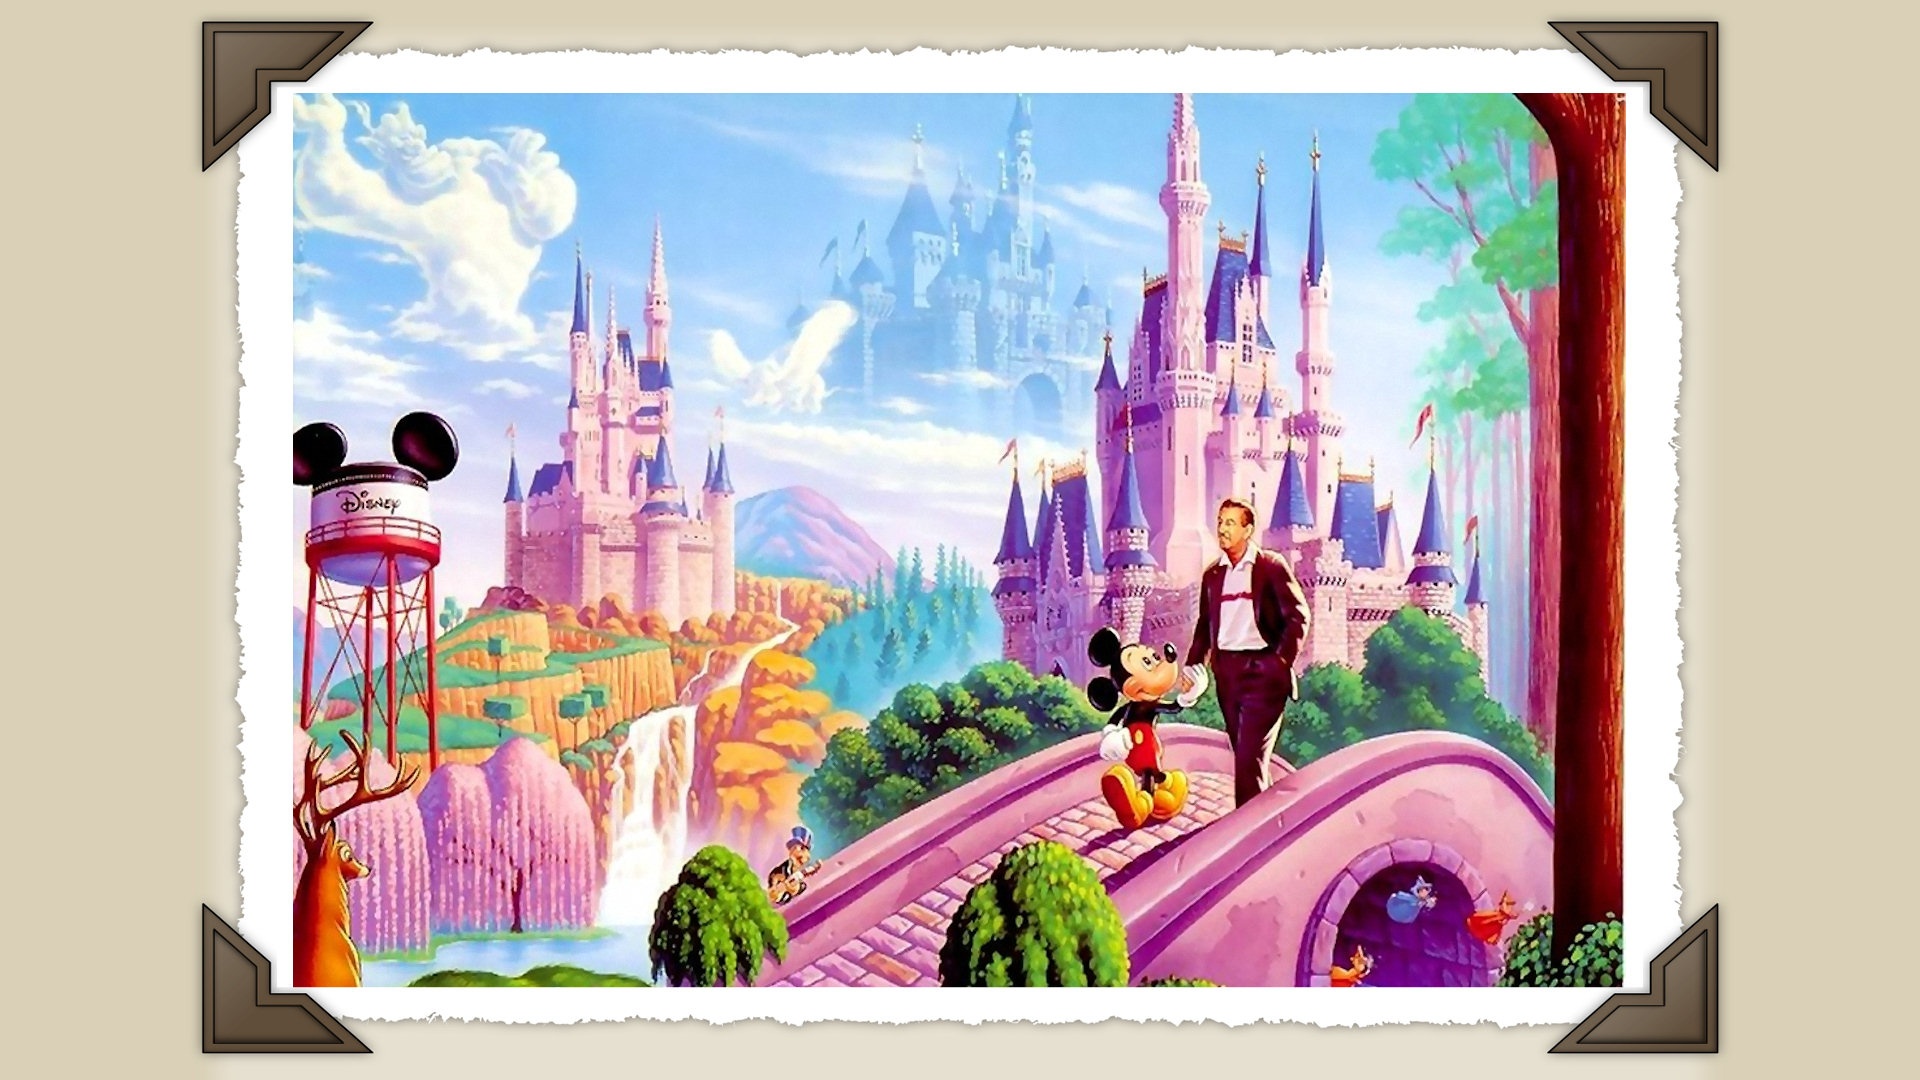 Walt Disney Backgrounds wallpapers HD   356783 1920x1080